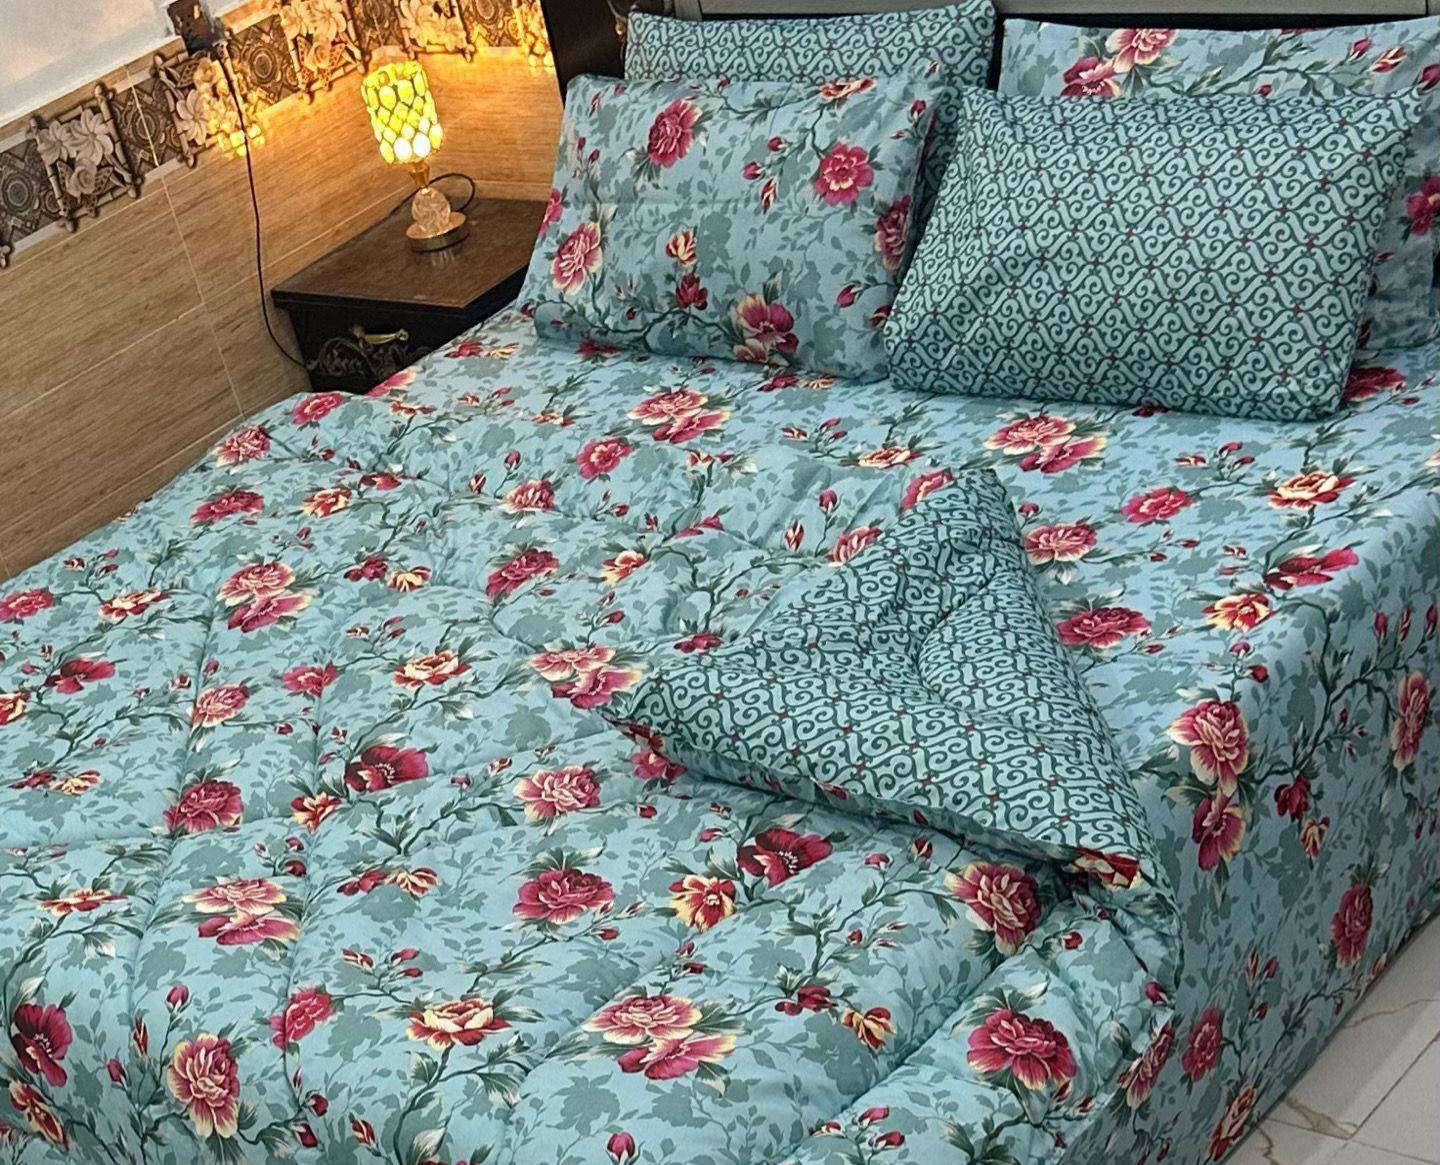 Bedsheet Set with Comforter - Blue